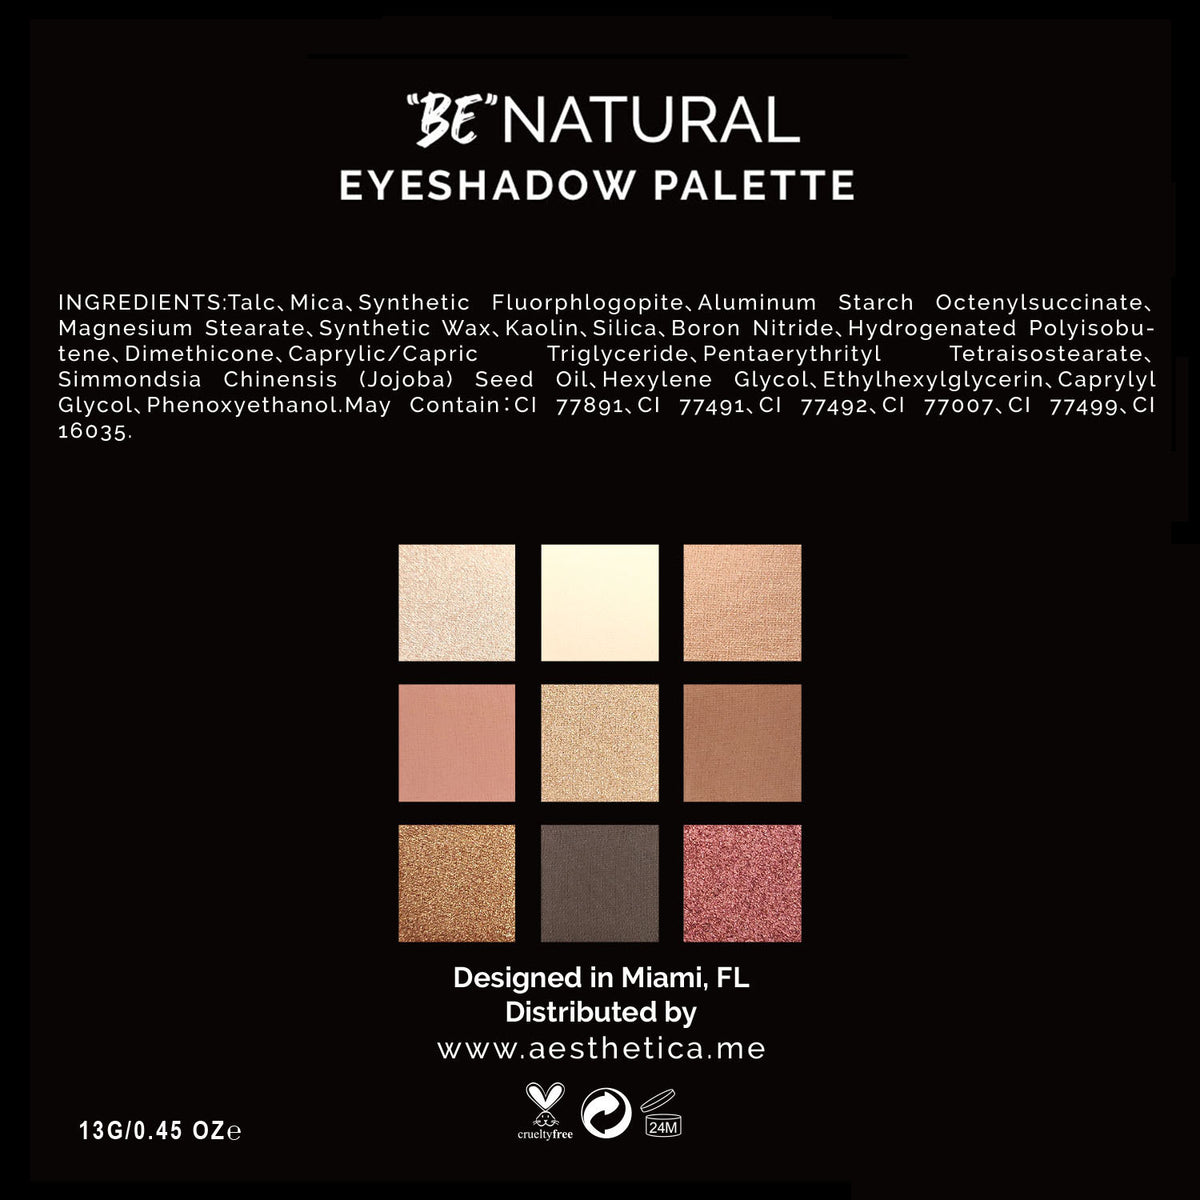 Aesthetica "BE" Eyeshadow Palette